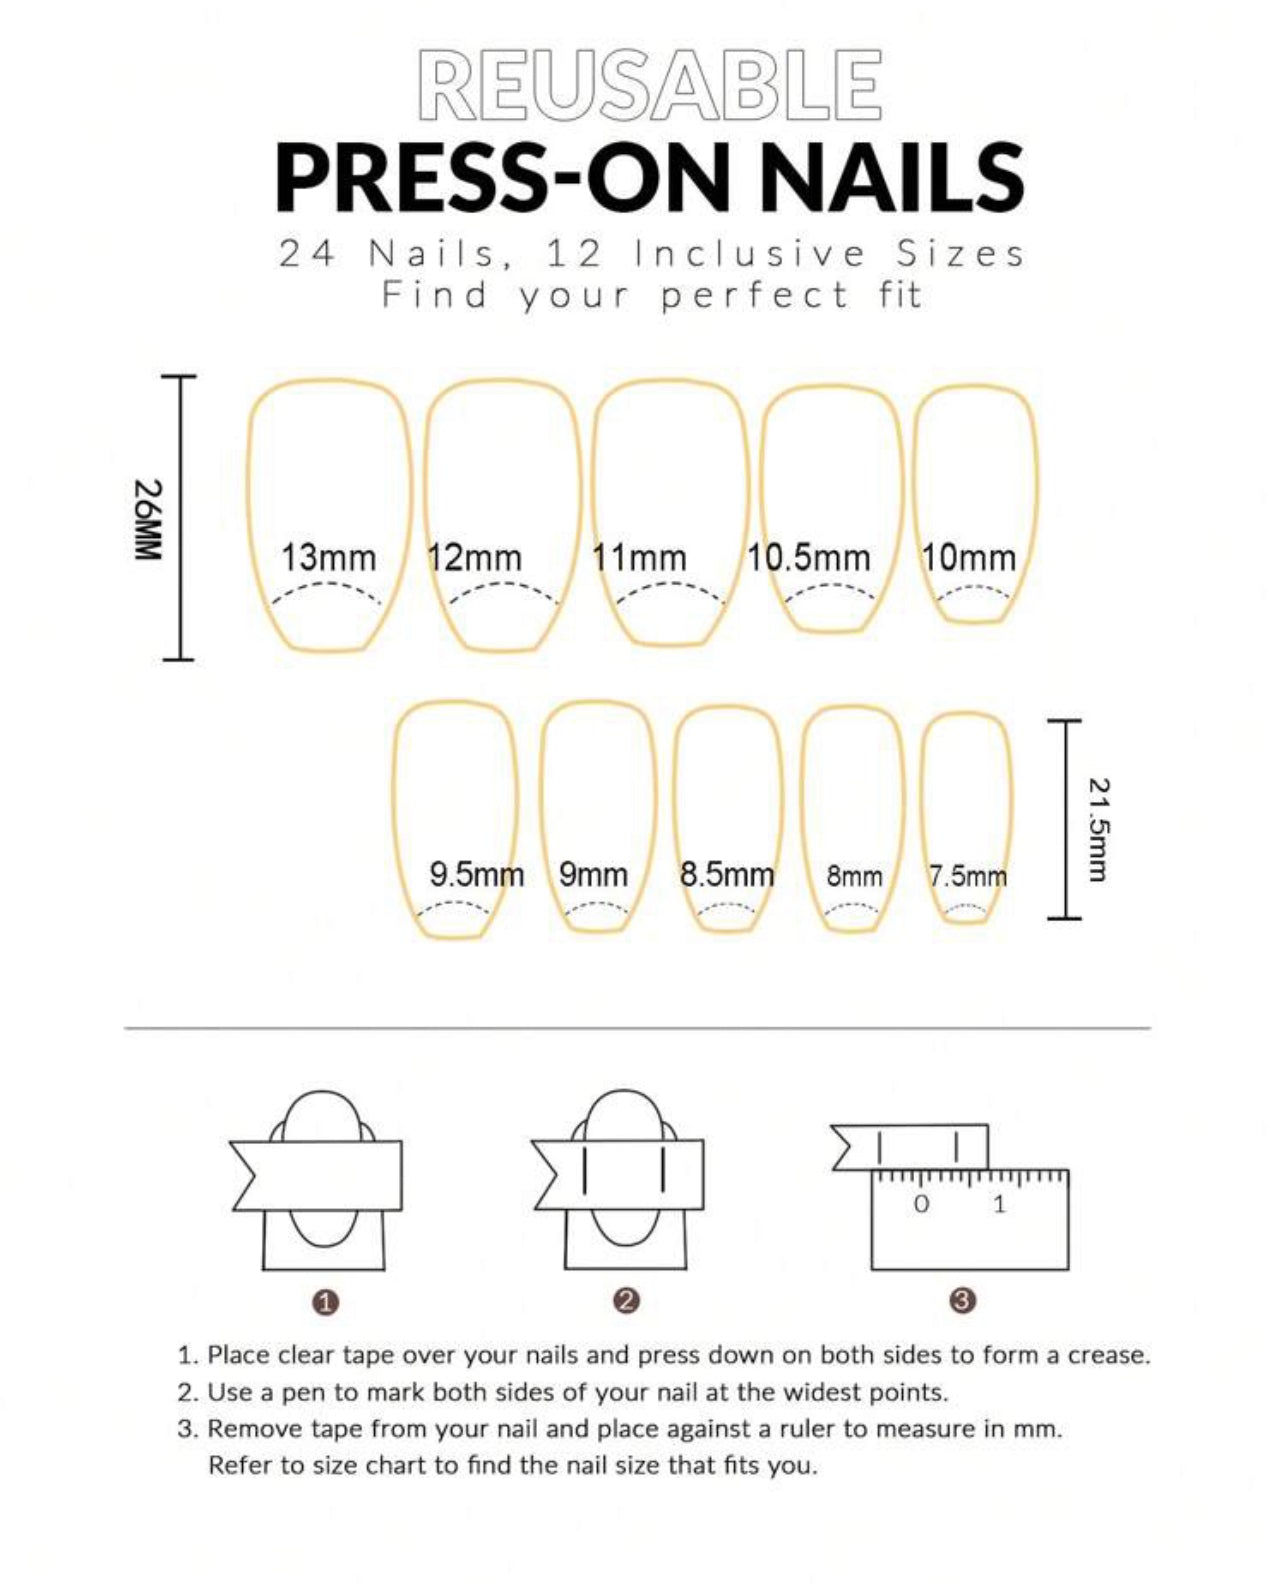 Medium size false nails